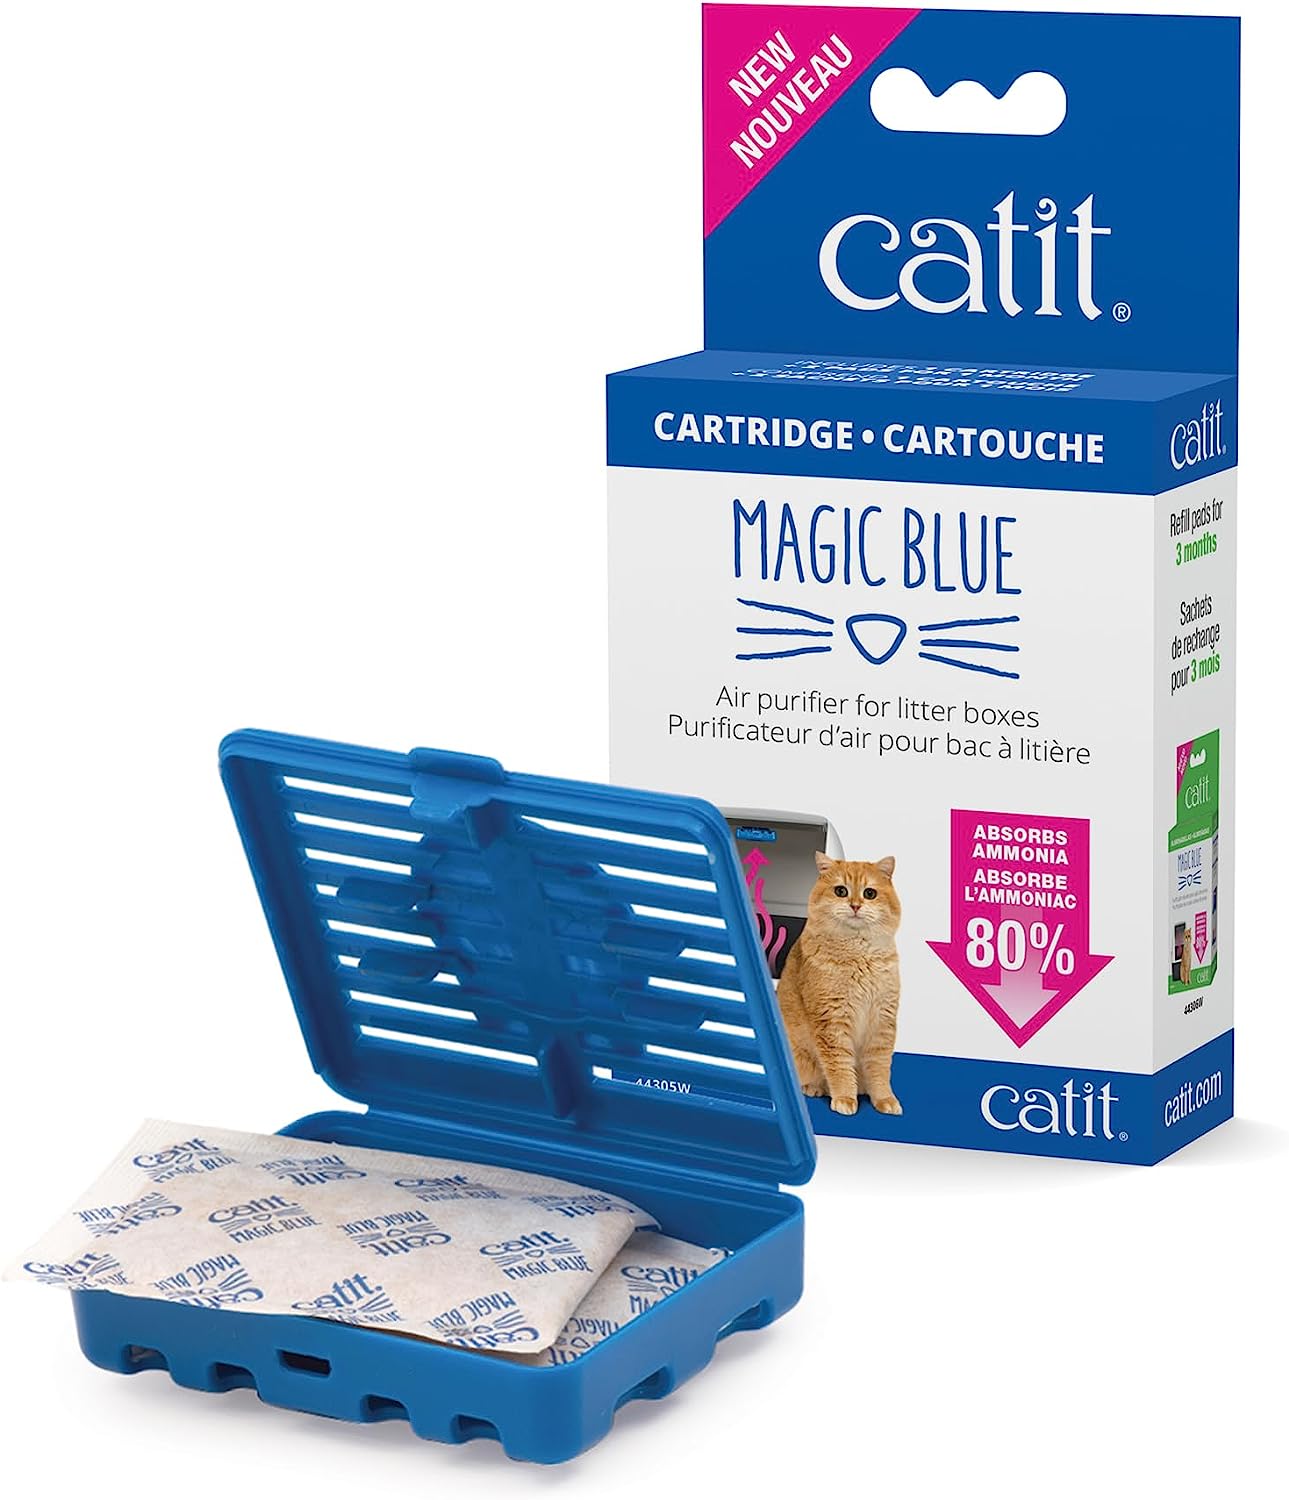 Catit Magic Blue Cat Litter Box Air Purifier